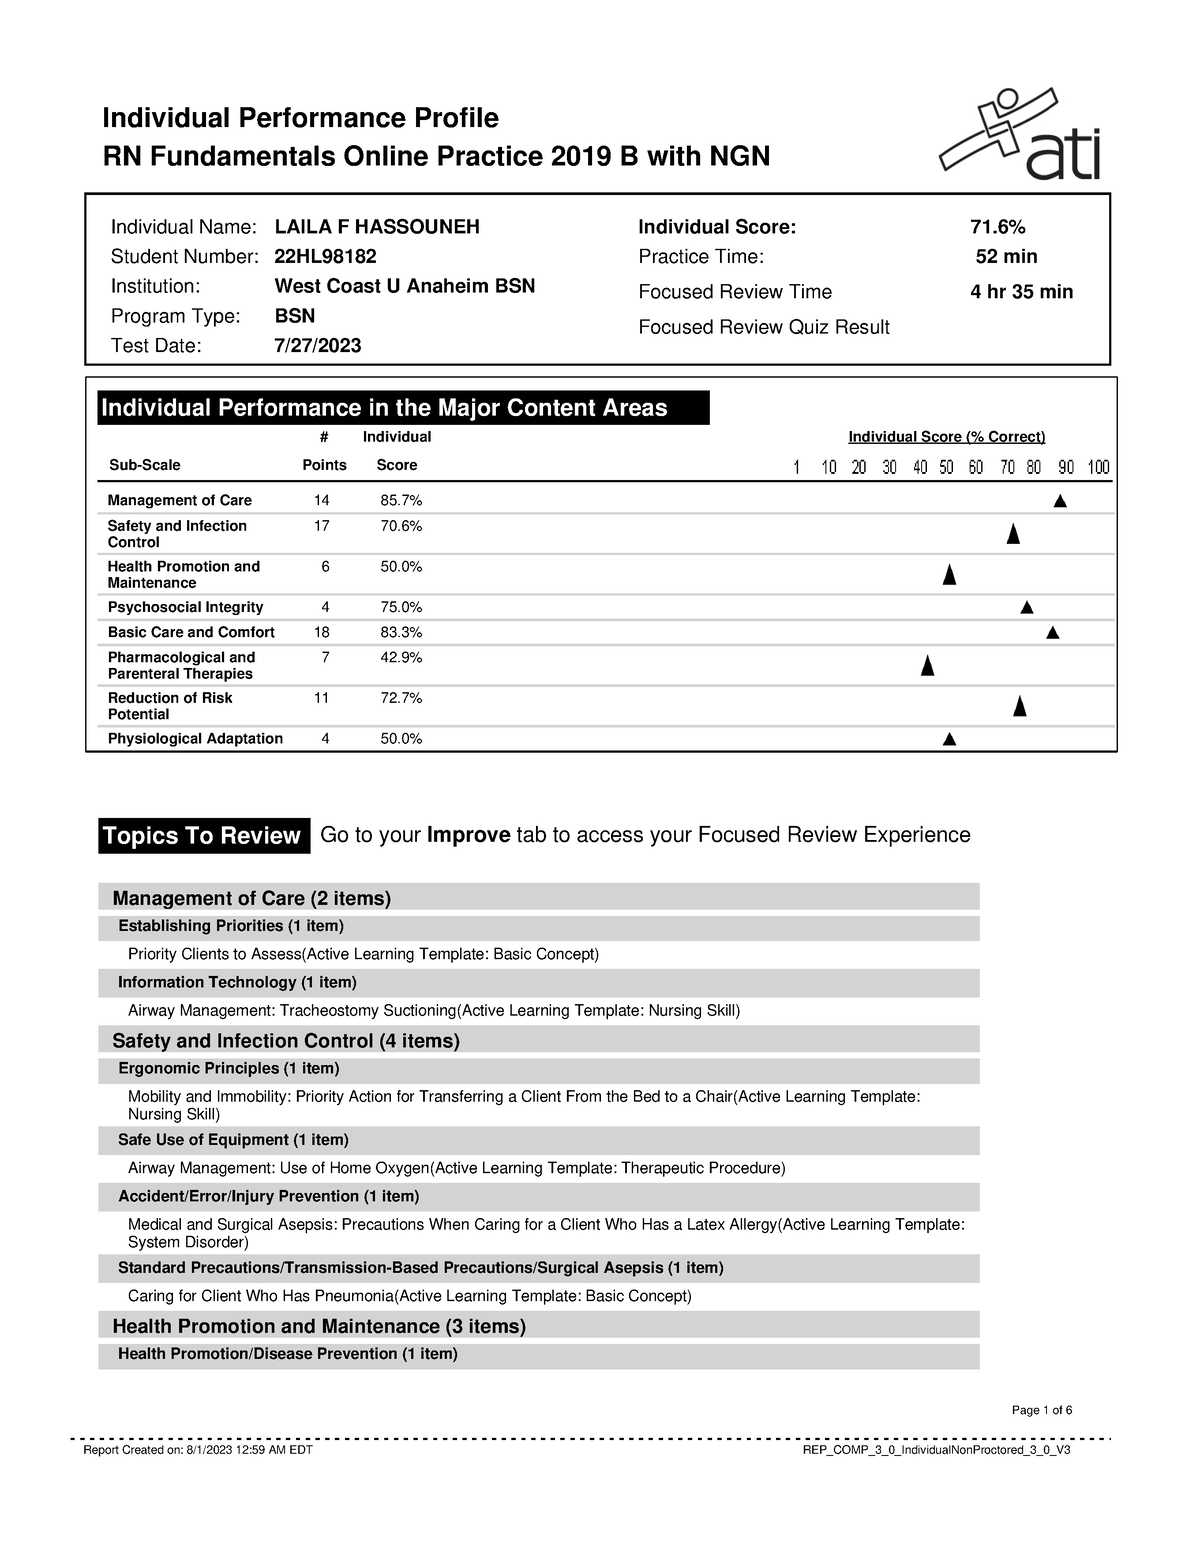 Report (62) ati mod Individual Performance Profile RN Fundamentals